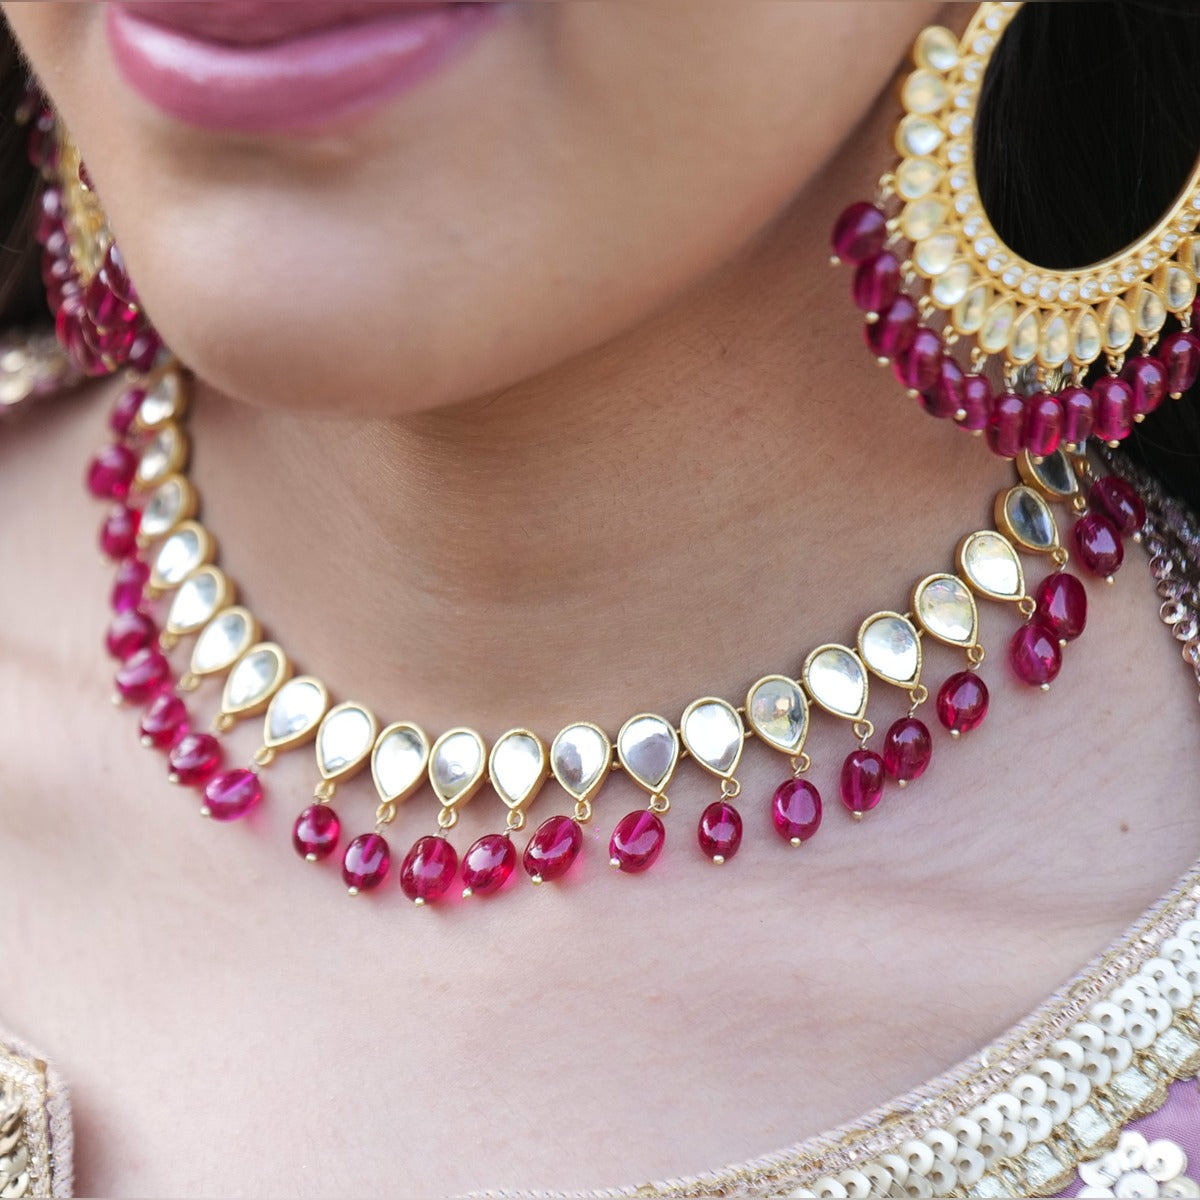 Jashn Choker Necklace - Rani Pink Hued Stone